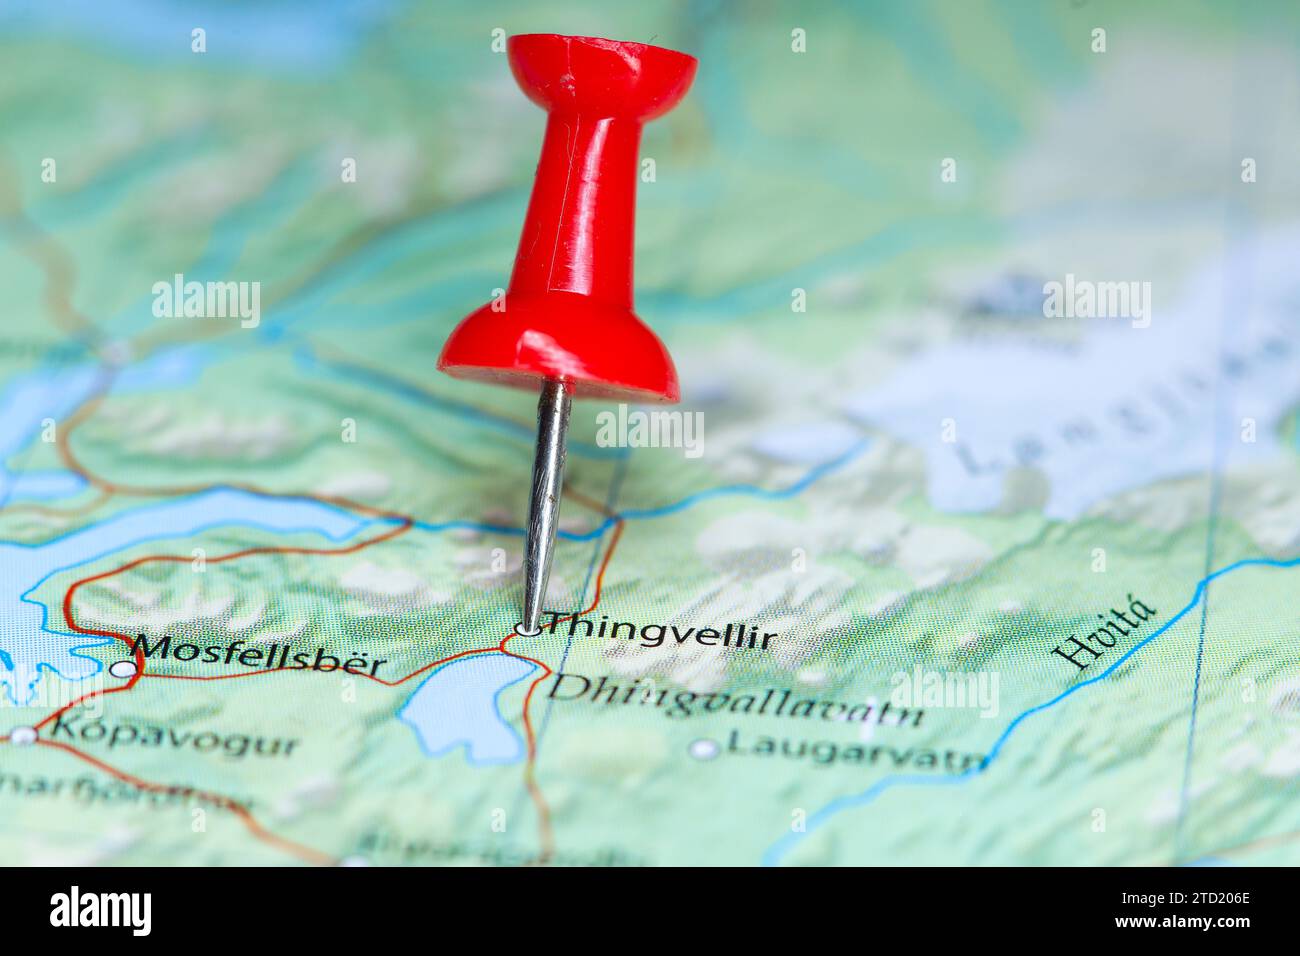 Thingvellir, Iceland pin on map Stock Photo